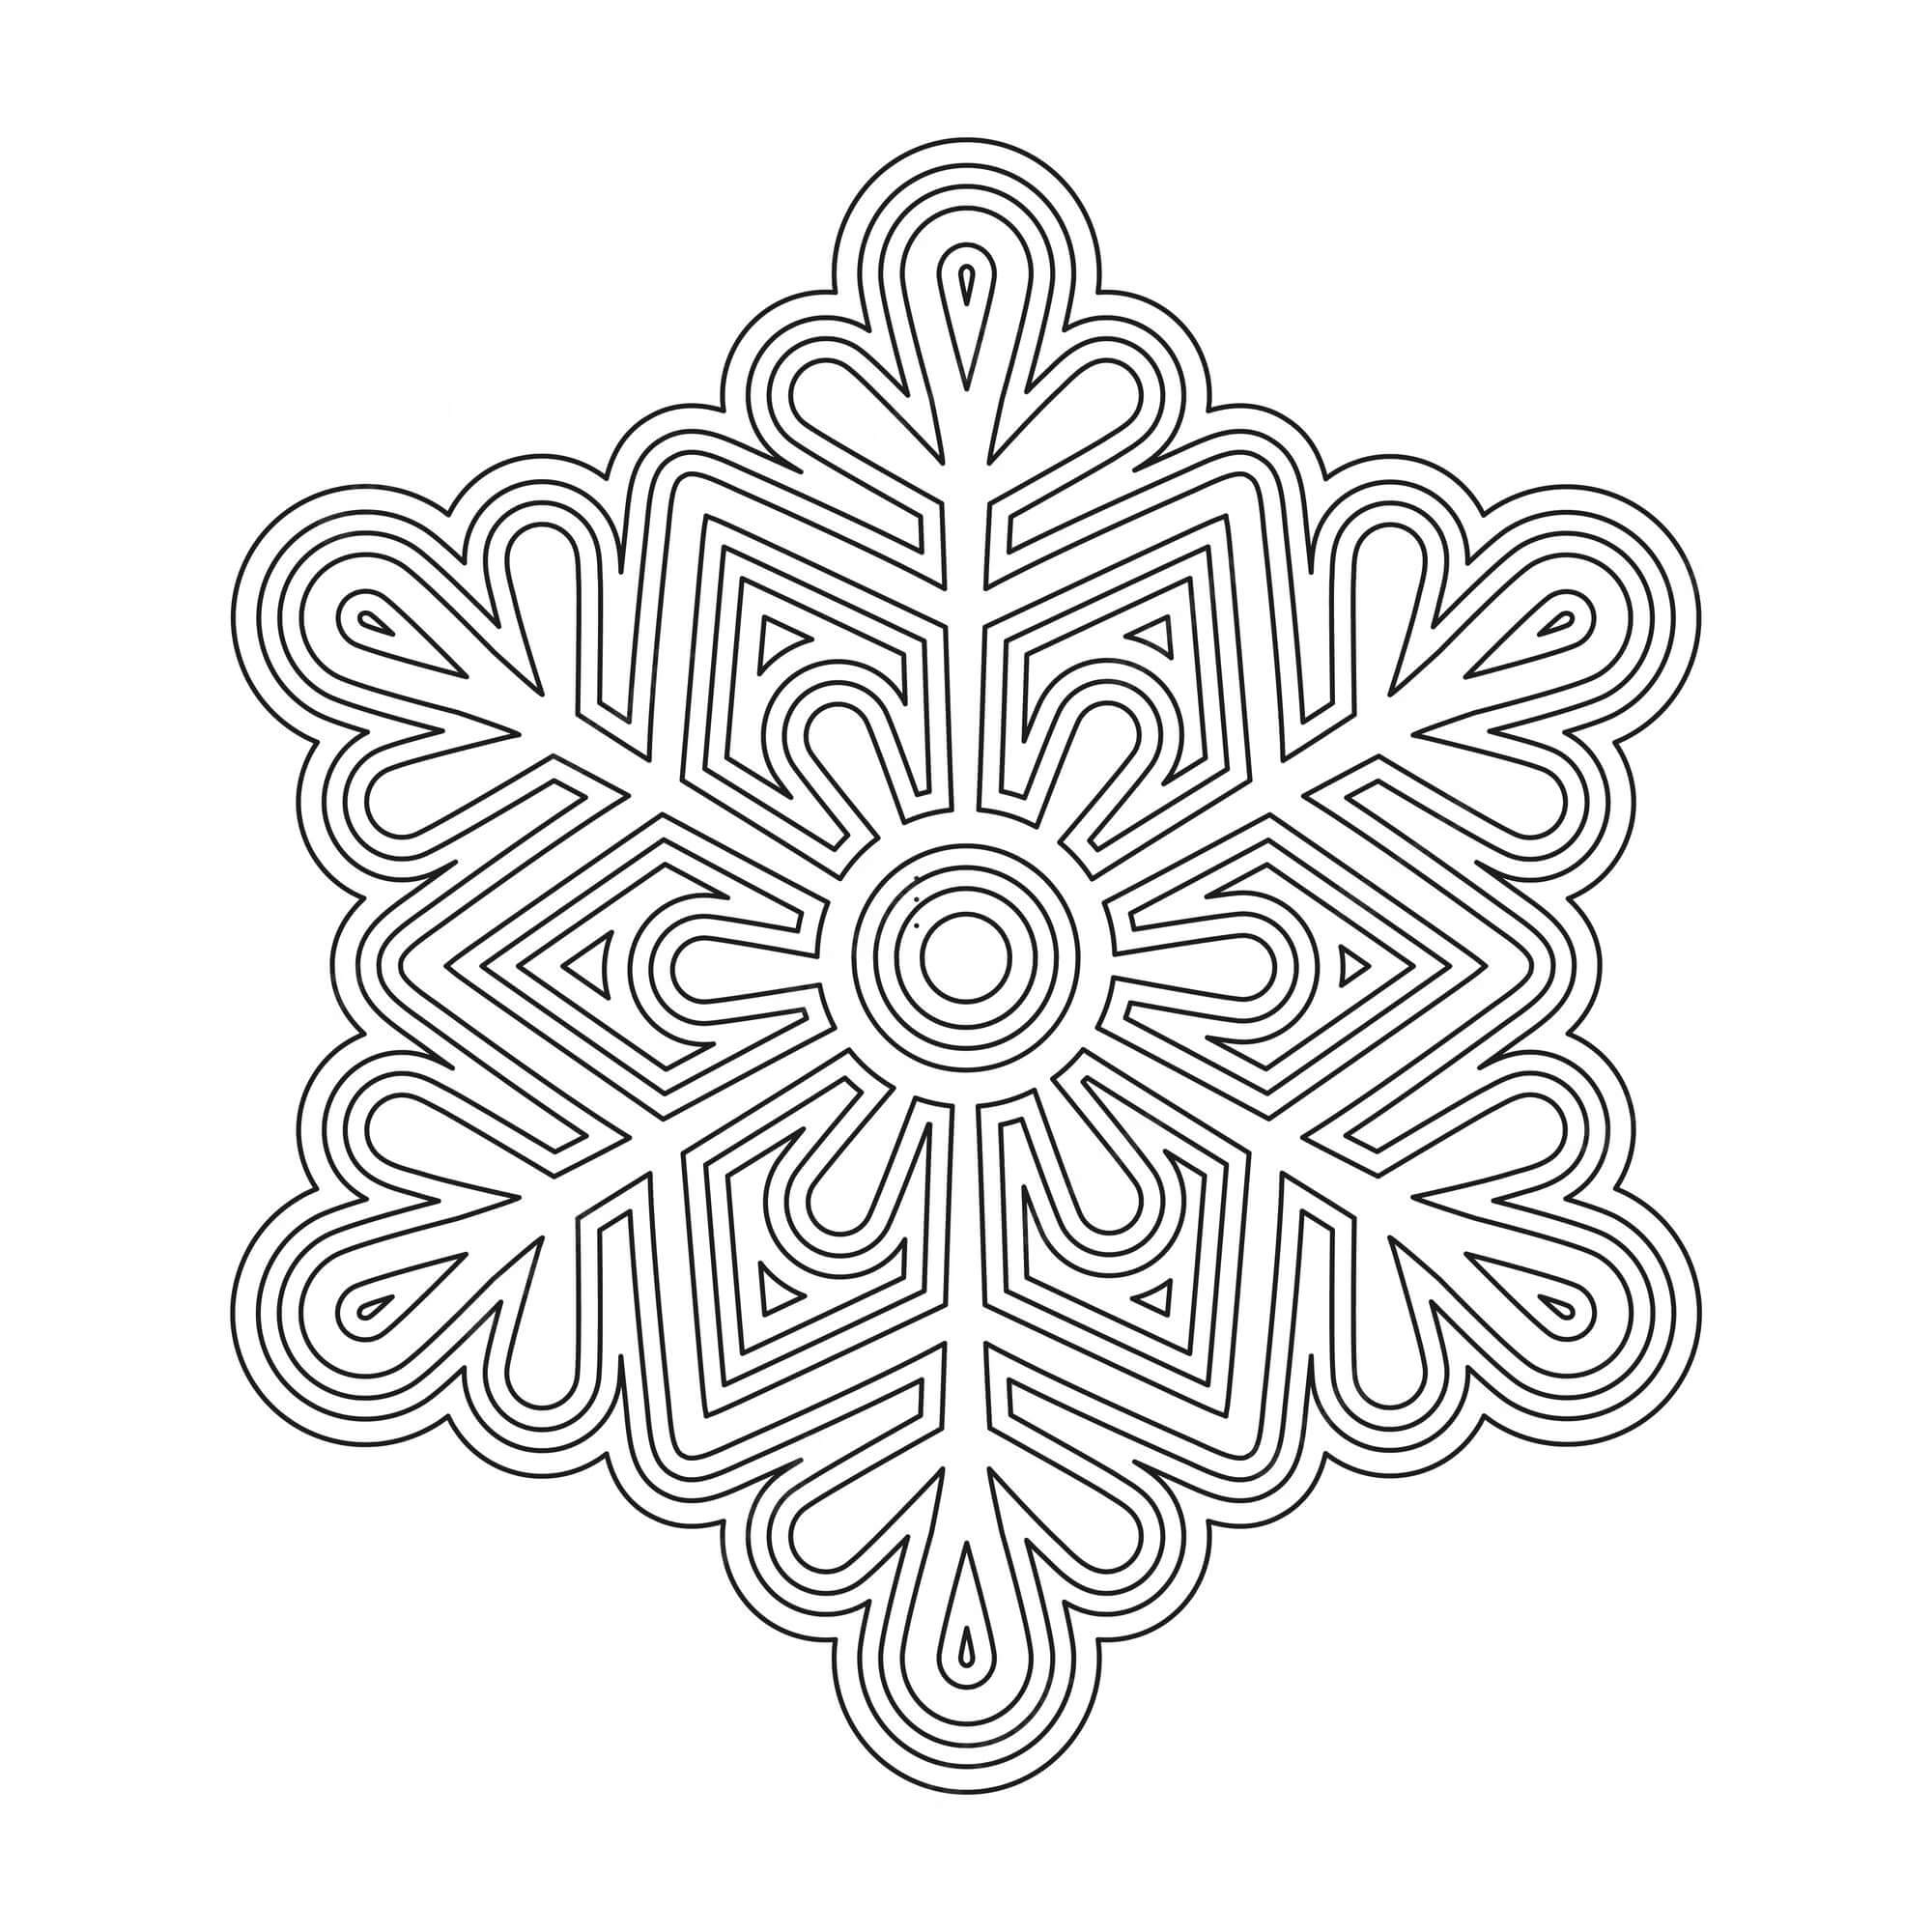 Mandala Winter Coloring Page - Sheet 3 Mandalas